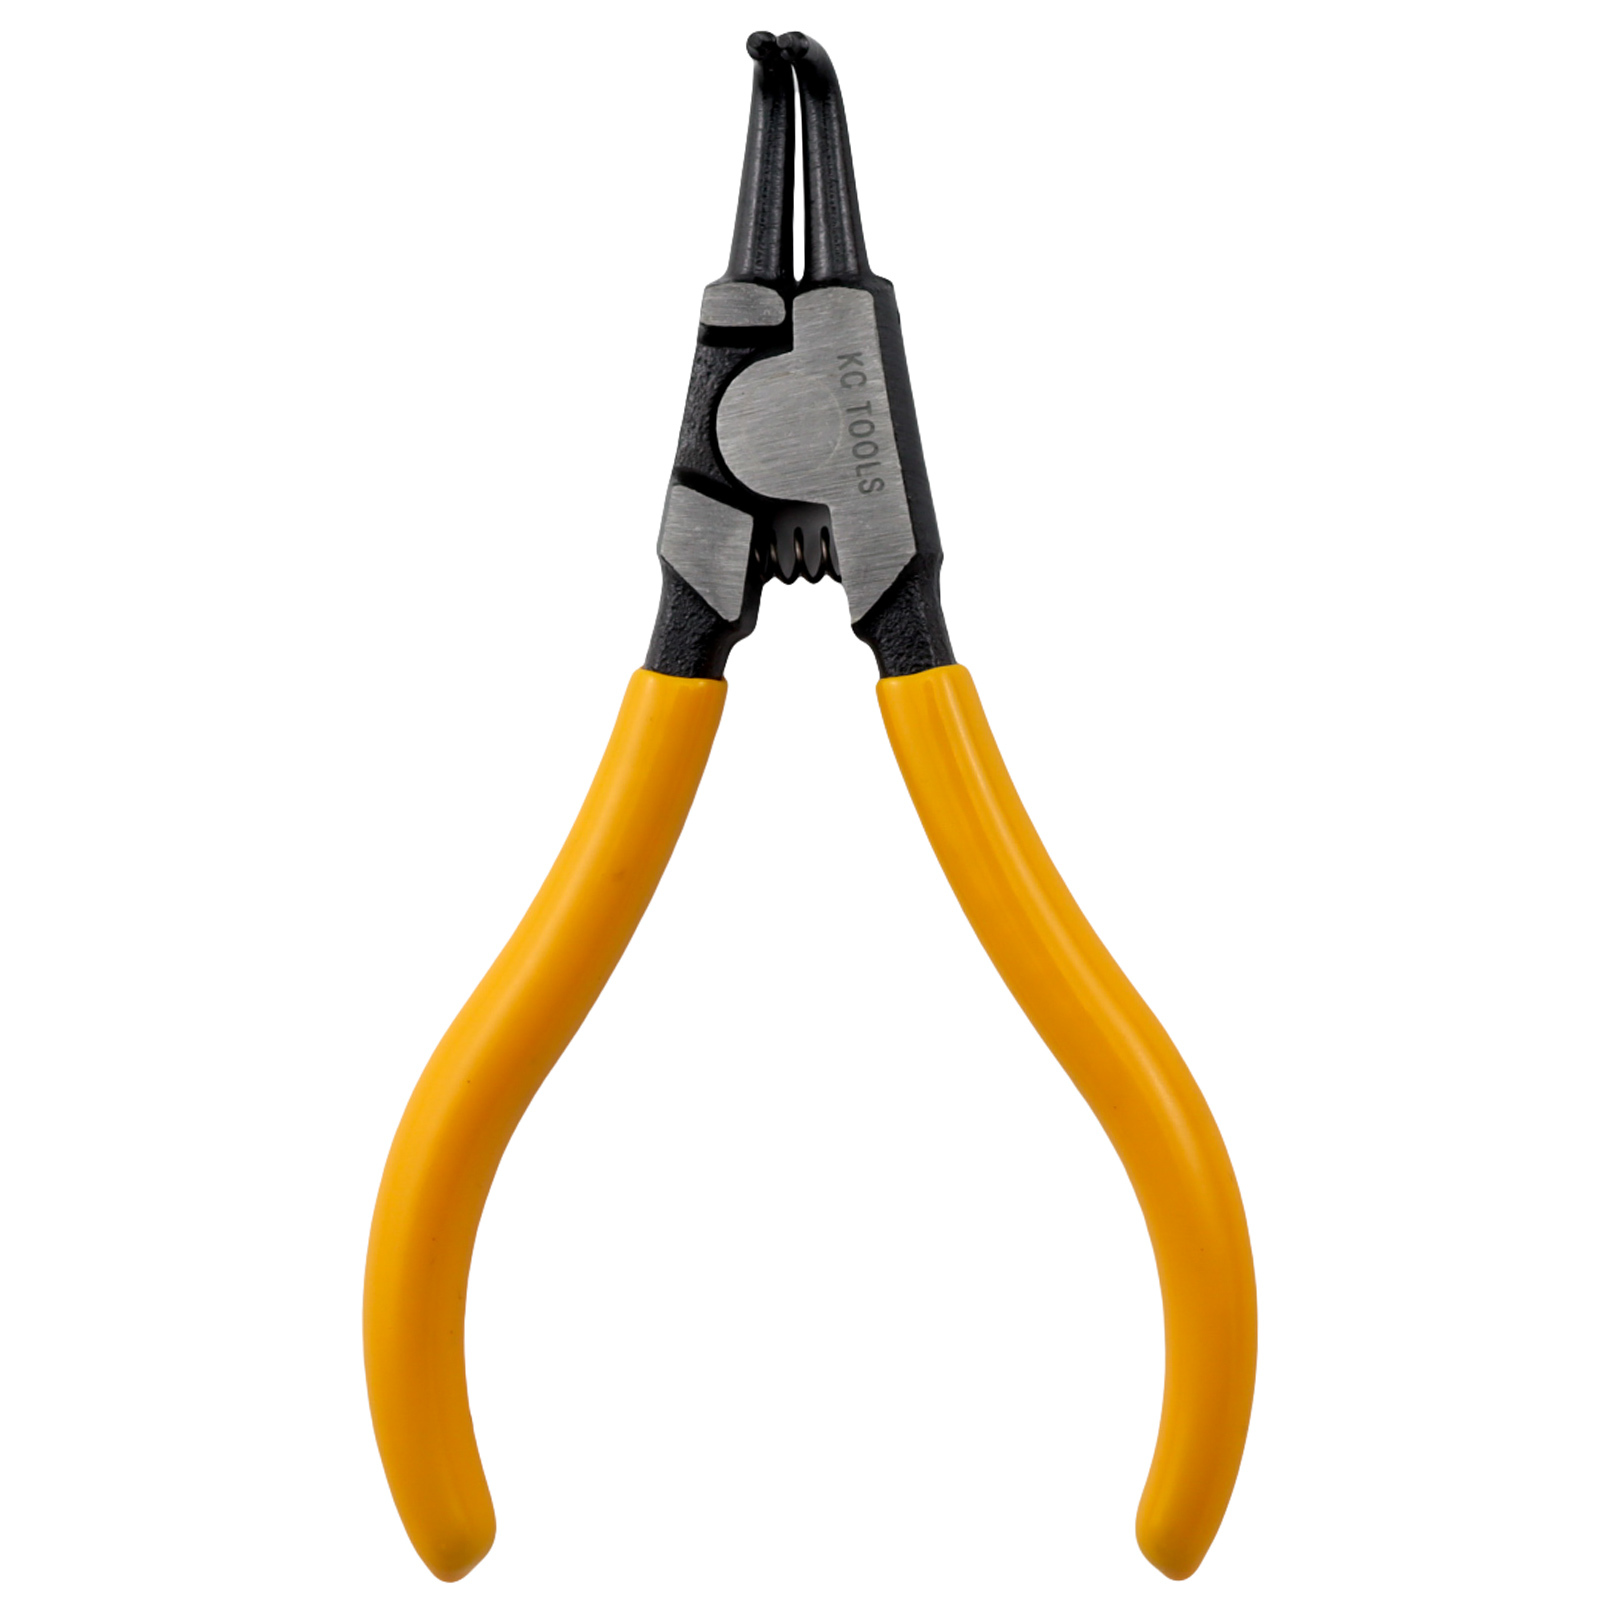 External Bent Pliers, Alicates Circlip, Snap Ring Plier, Circlip Pliers